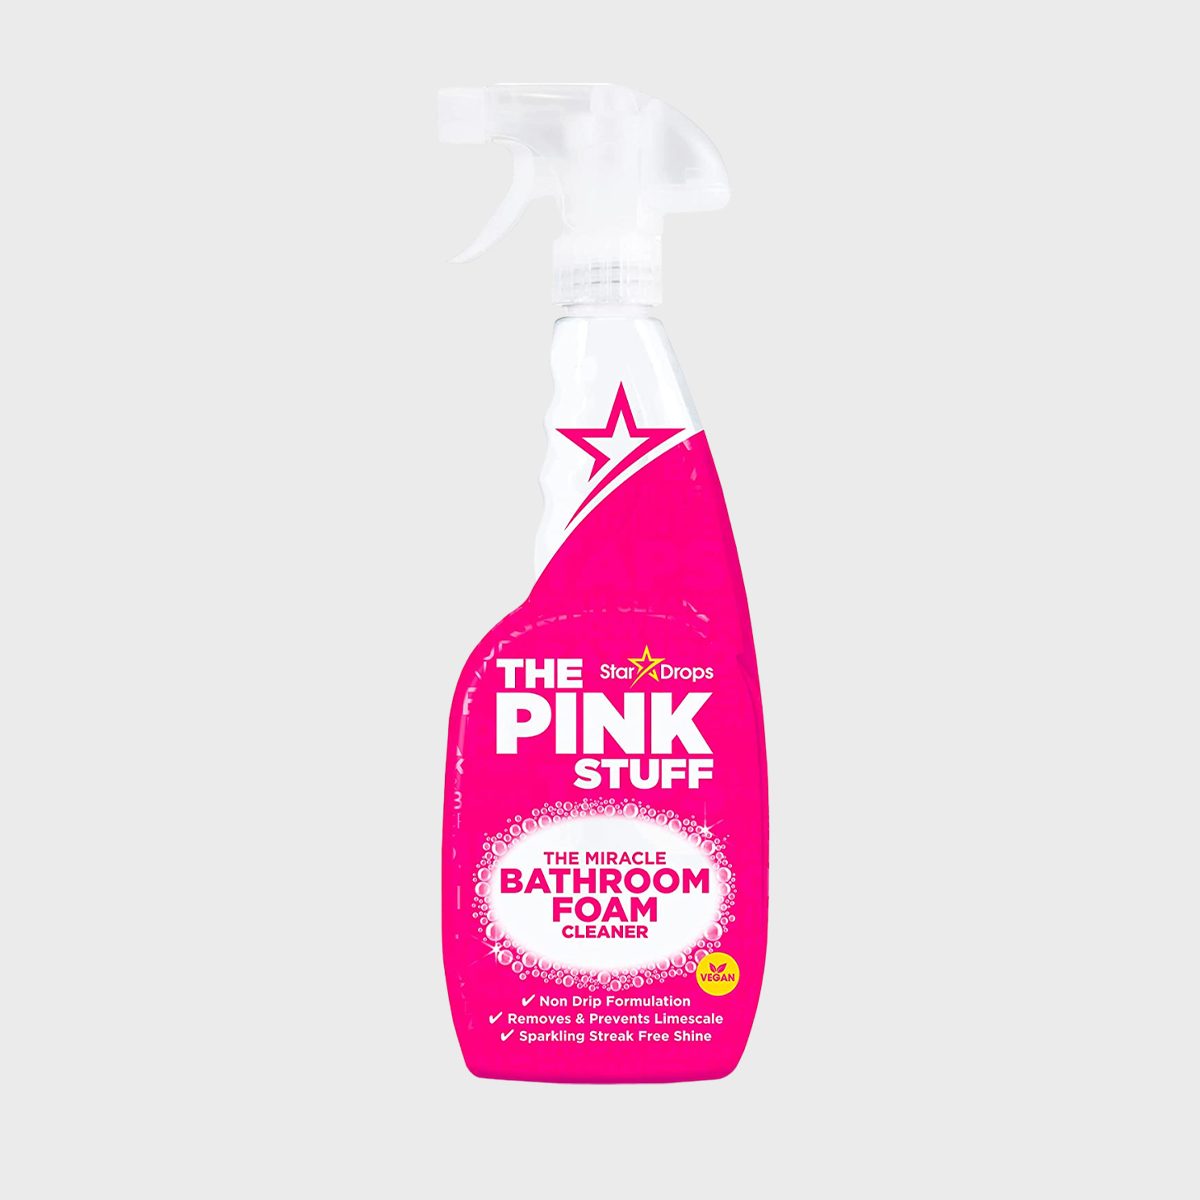 https://www.rd.com/wp-content/uploads/2023/05/Stardrops-The-Pink-Stuff-Miracle-Bathroom-Foam-Cleaner_ecomm_via-amazon.com_.jpg?fit=700%2C700